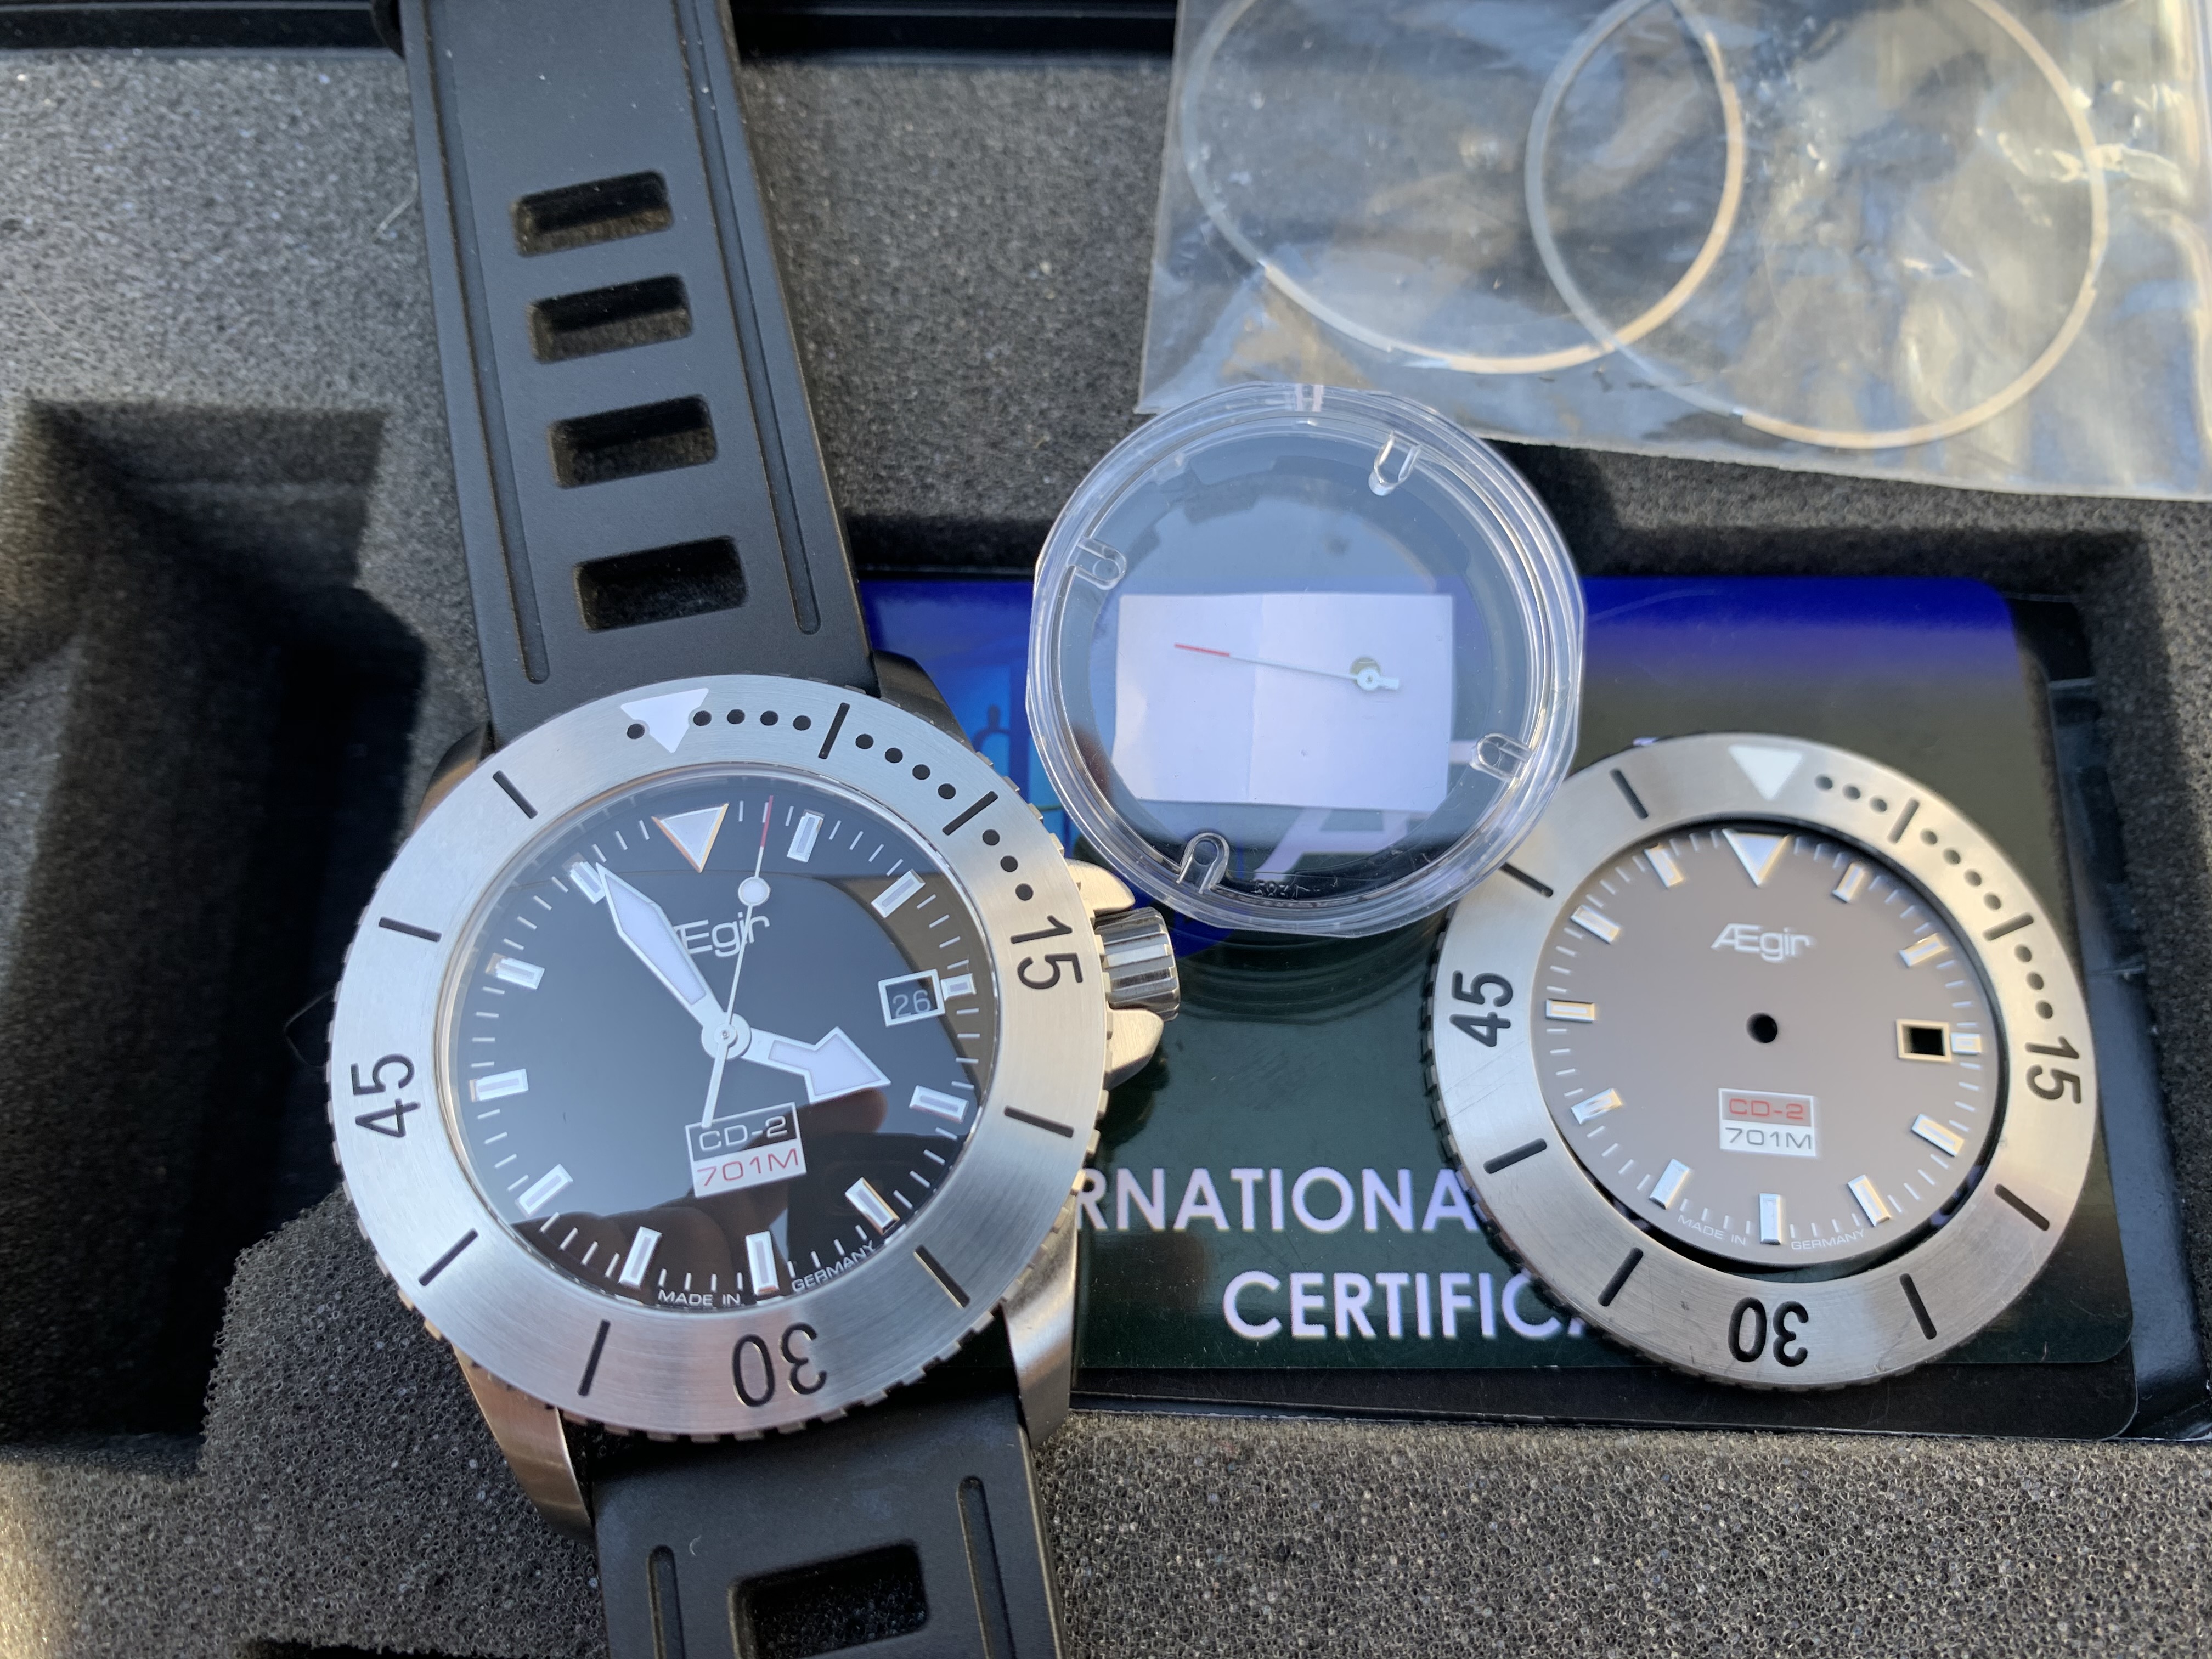 Aegir CD2 and Sig | Rolex watches, Divers watch, Rolex